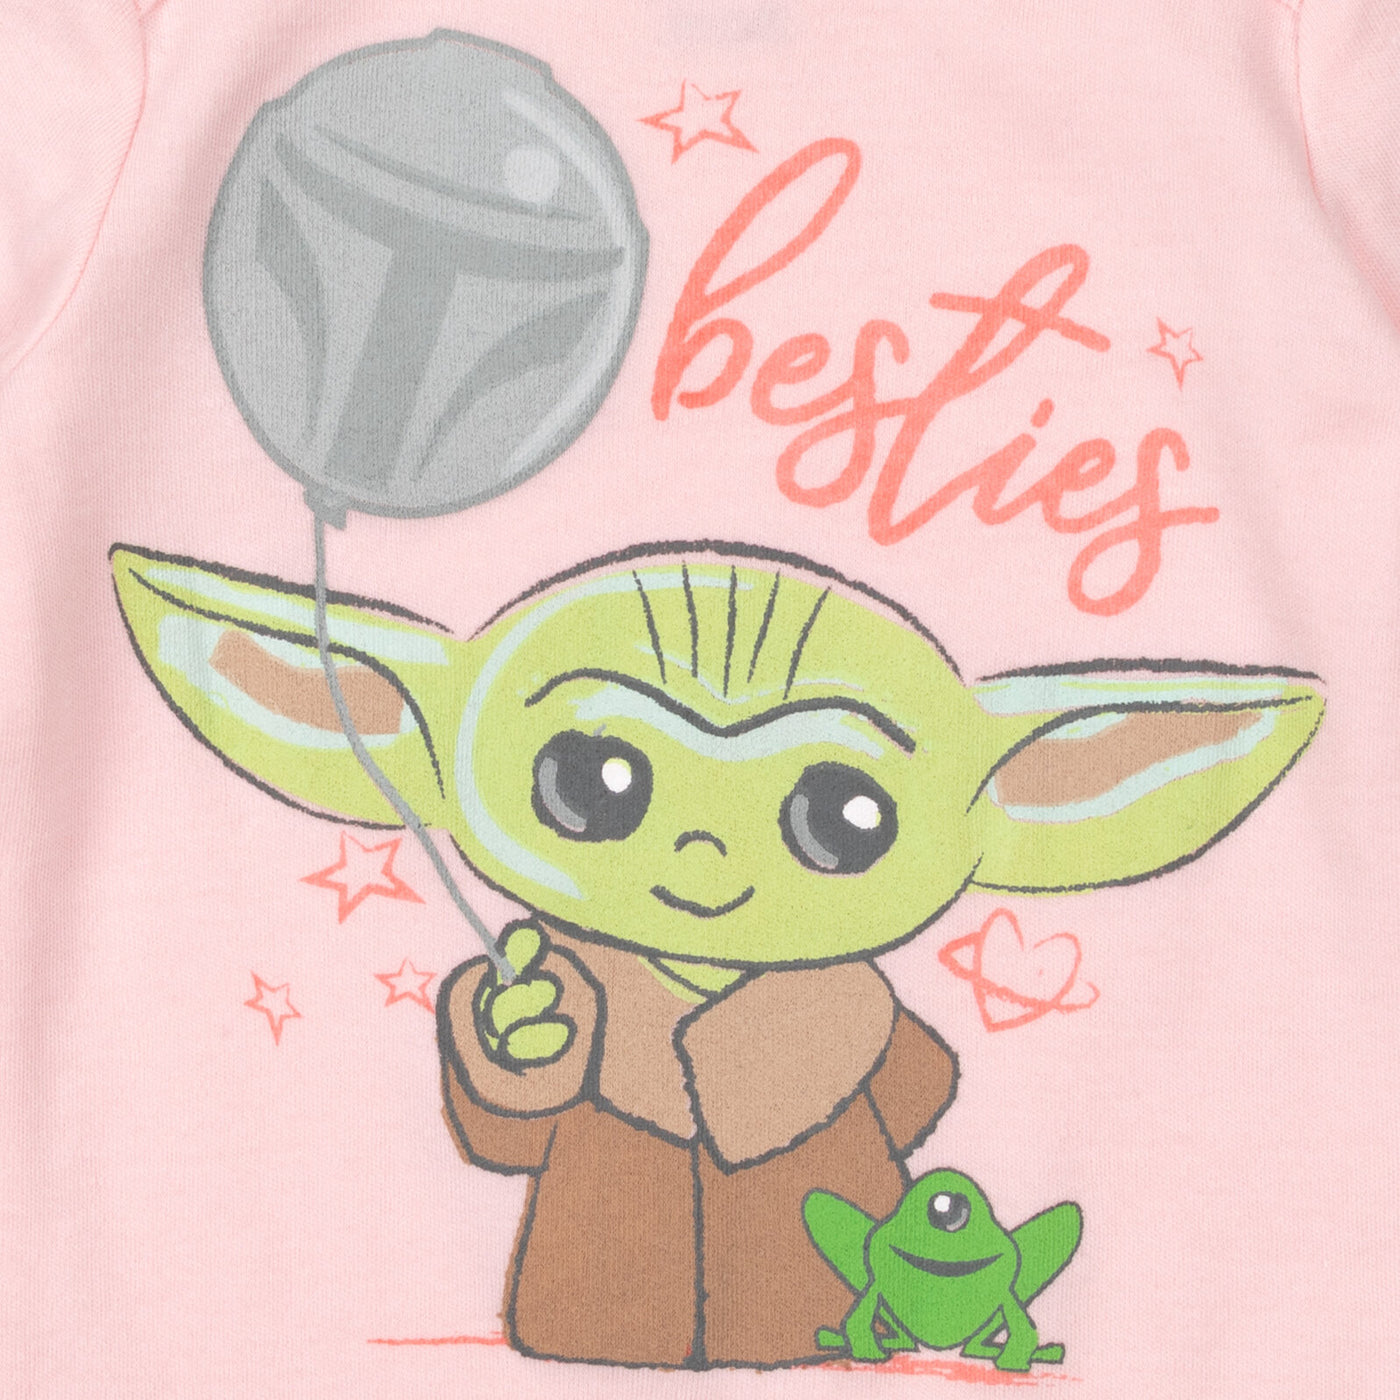 Star Wars Baby Yoda 3 Pack Bodysuits